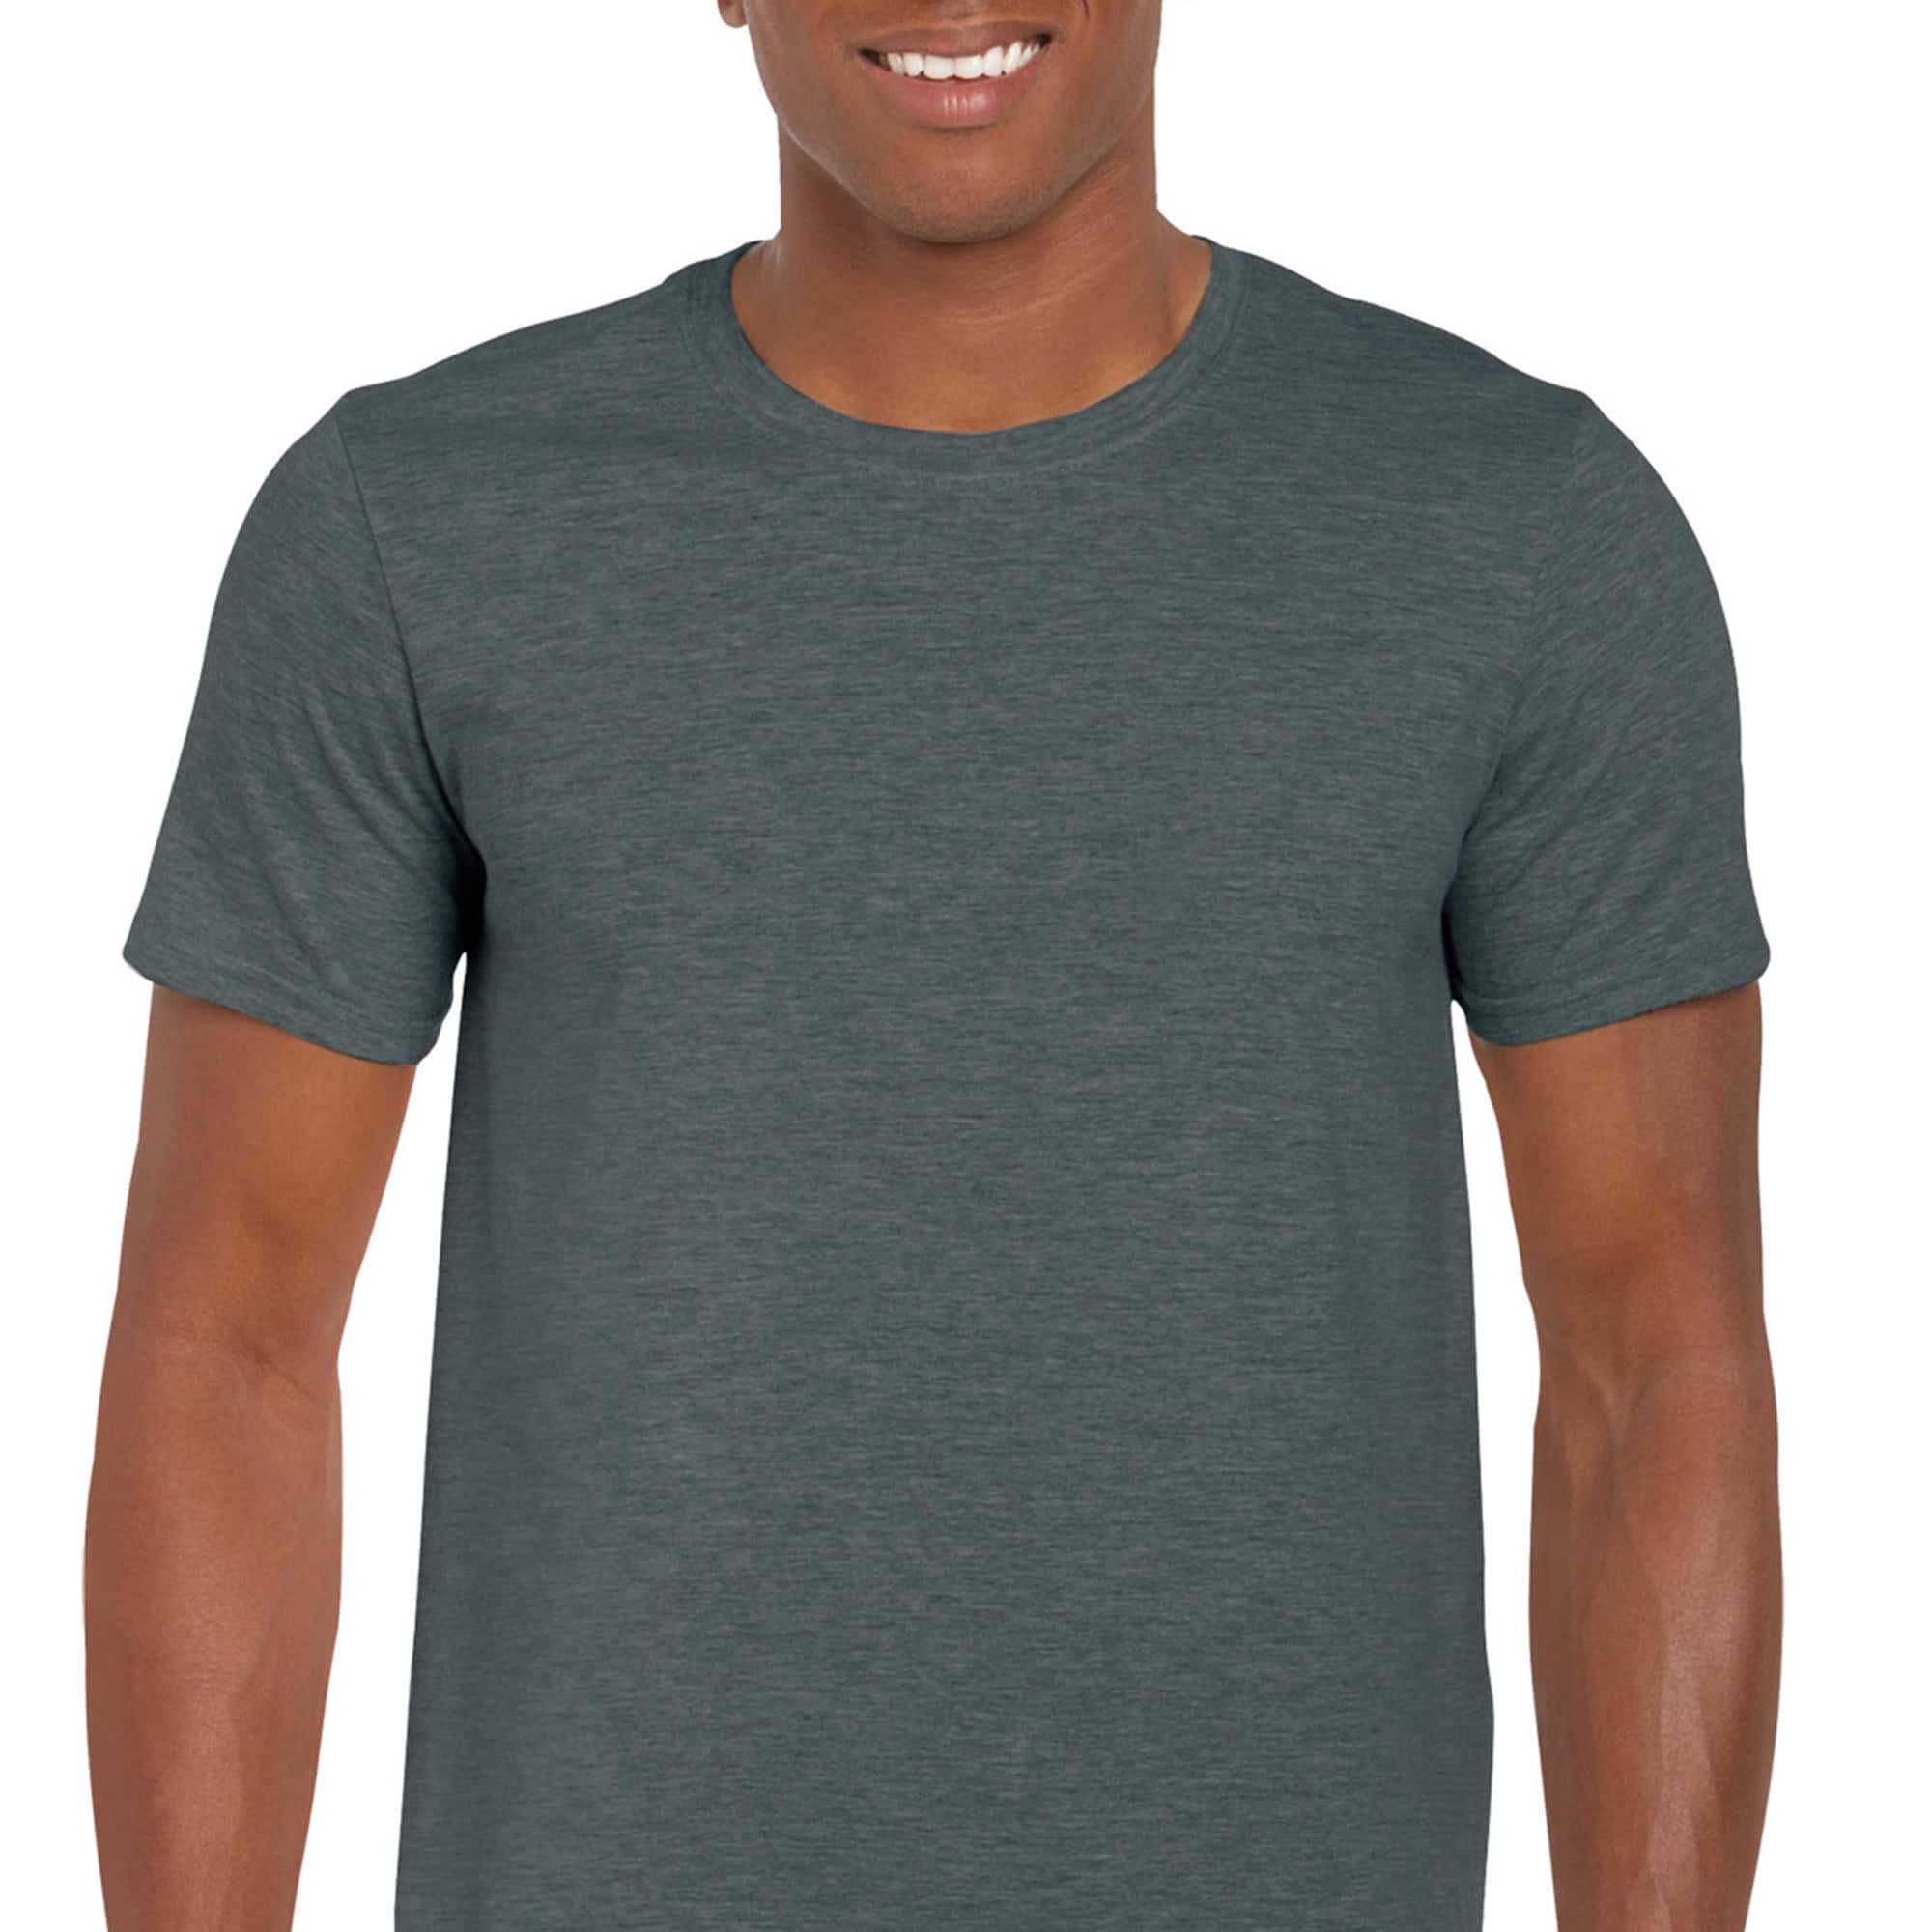 Brandon Adult Cotton Long Sleeve T-shirt-Grey Heather